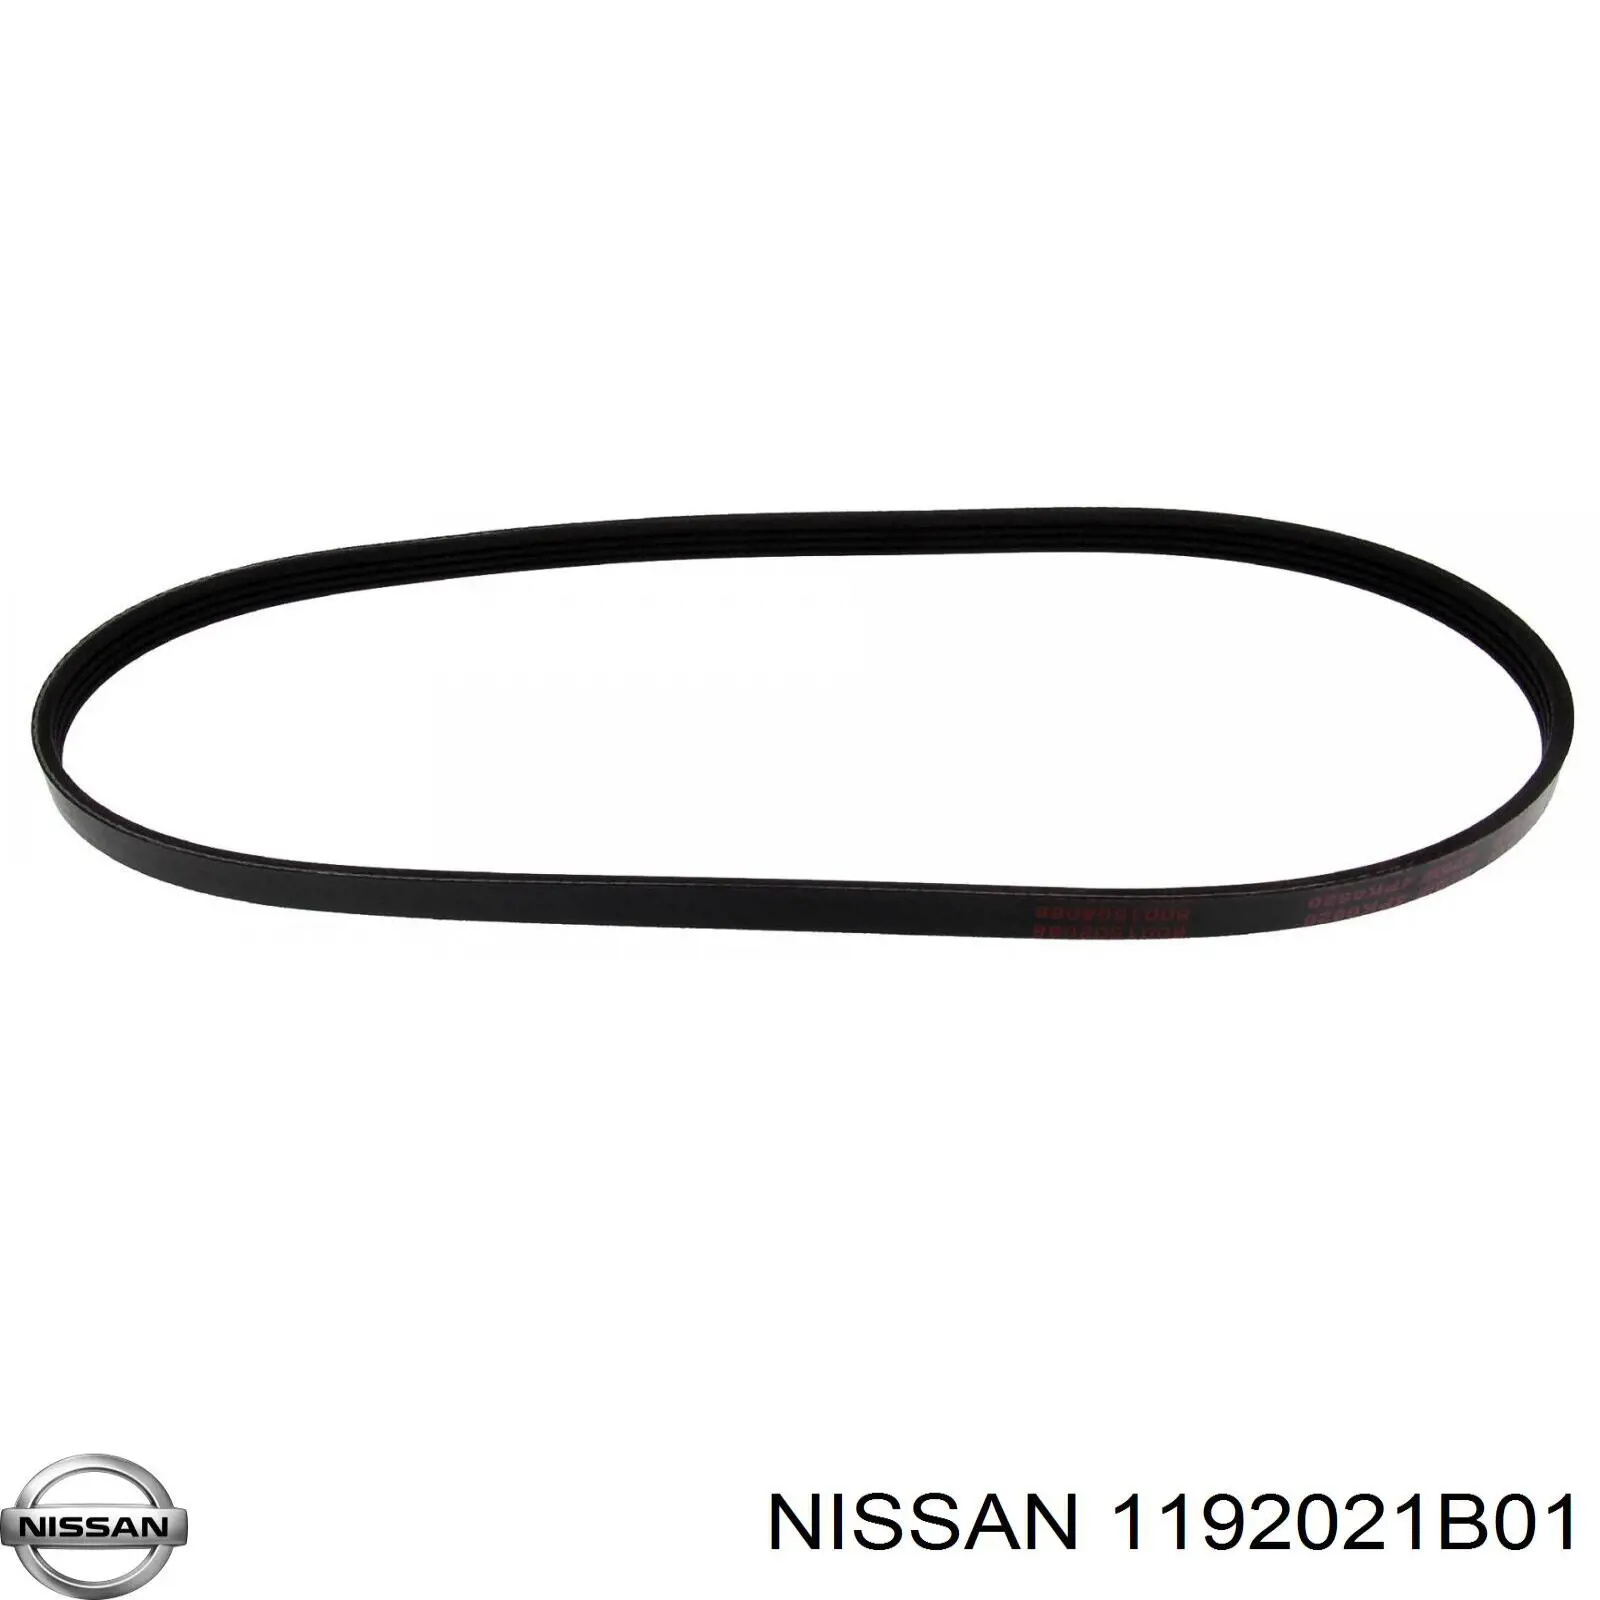 1192021B01 Nissan correa trapezoidal